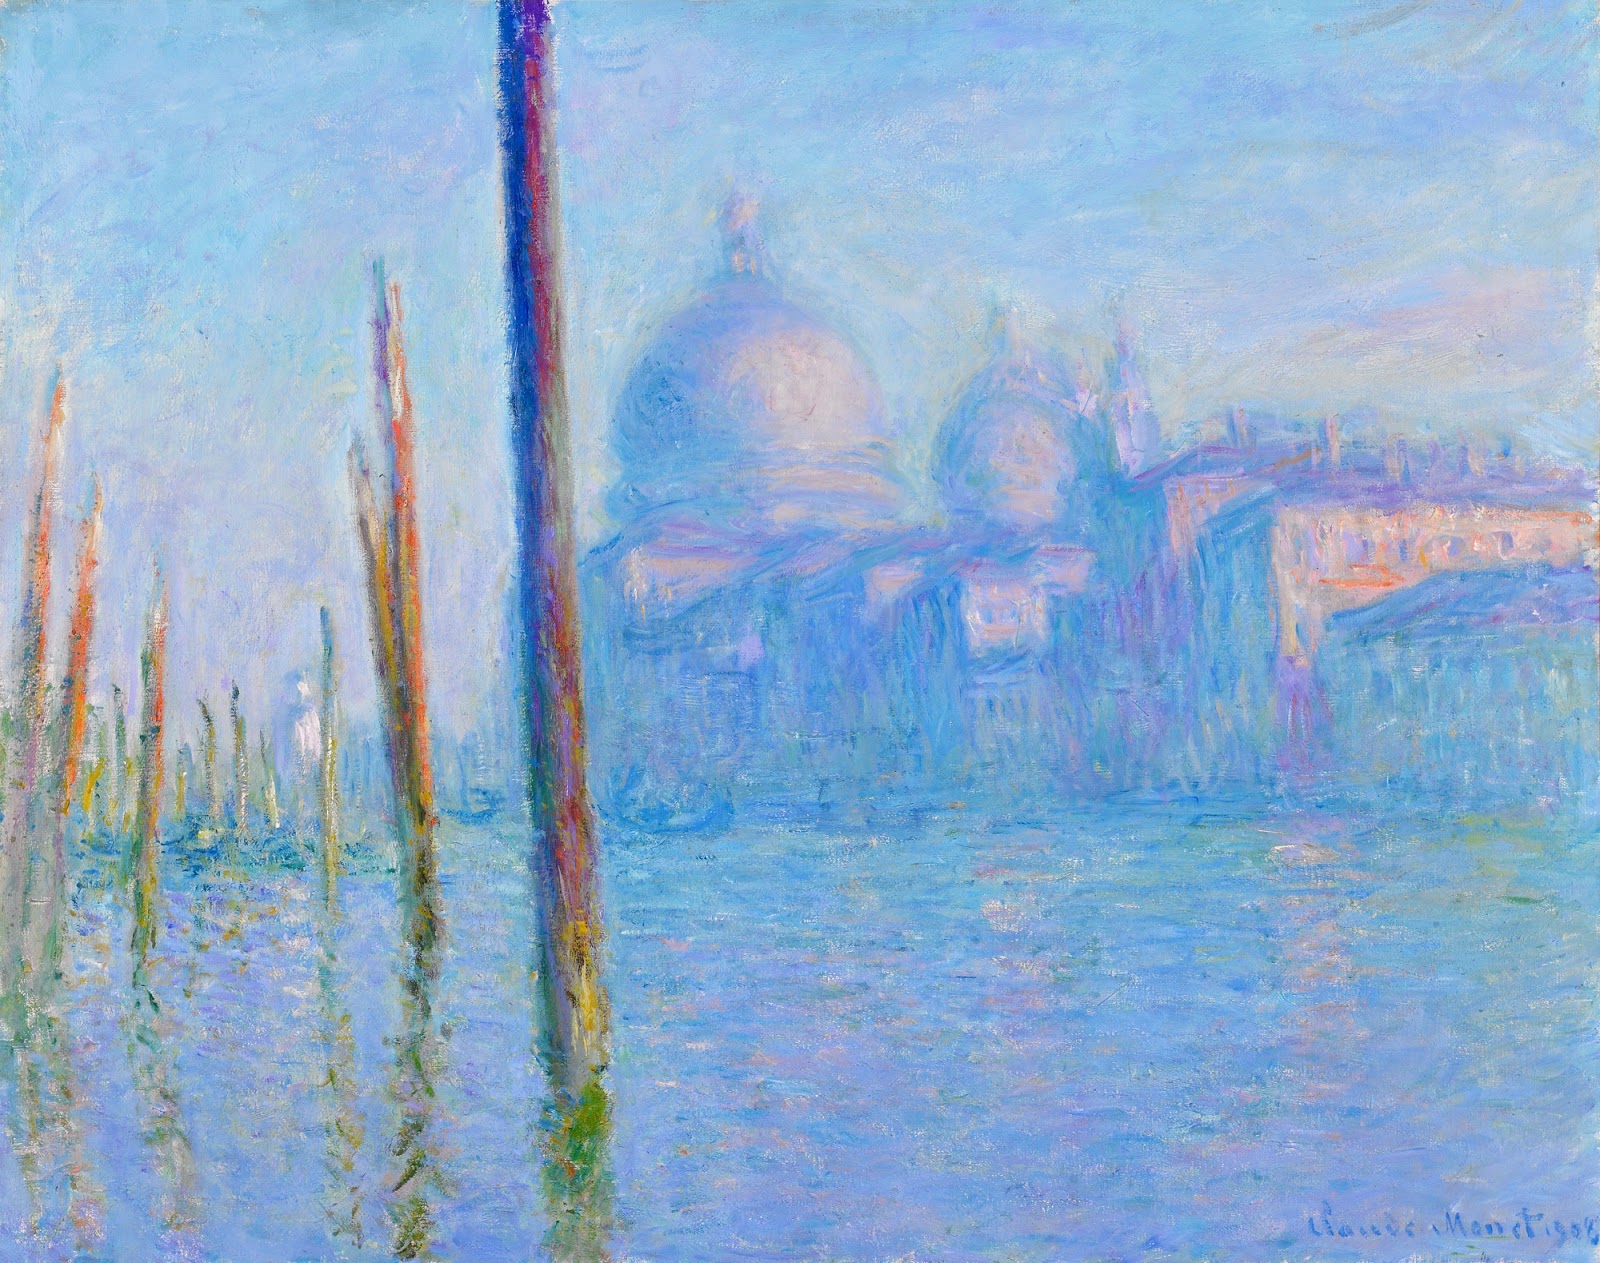 Claude+Monet-1840-1926 (429).jpg